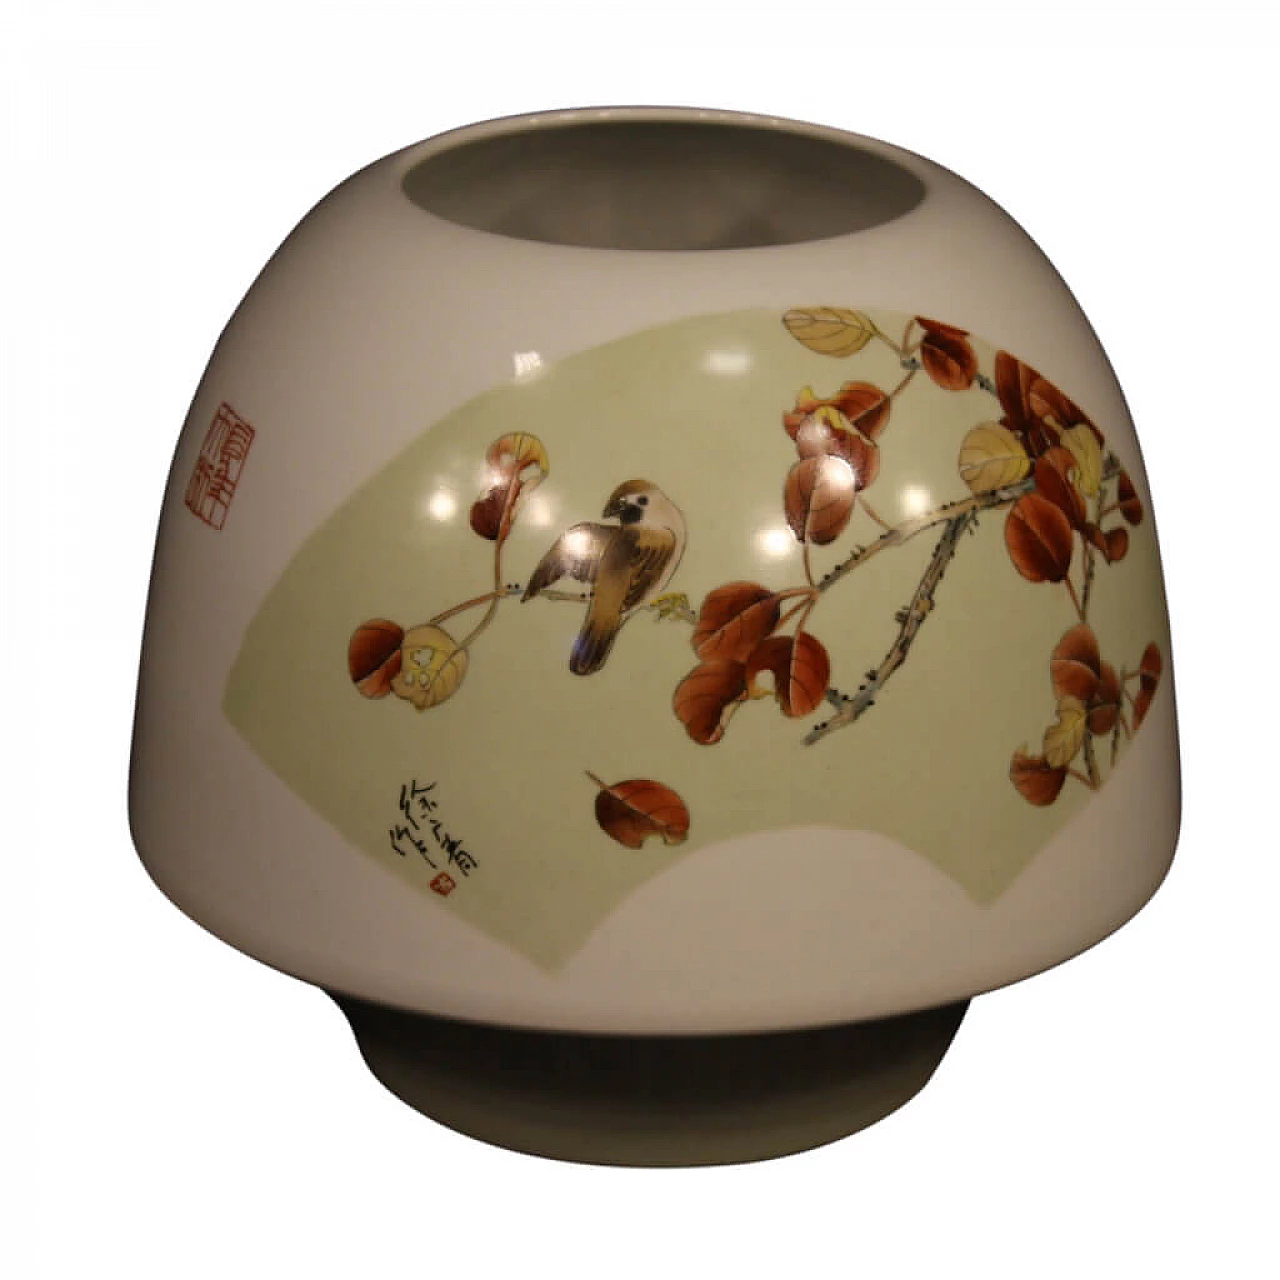 Vaso cinese in ceramica dipinta con decori floreali 1105392